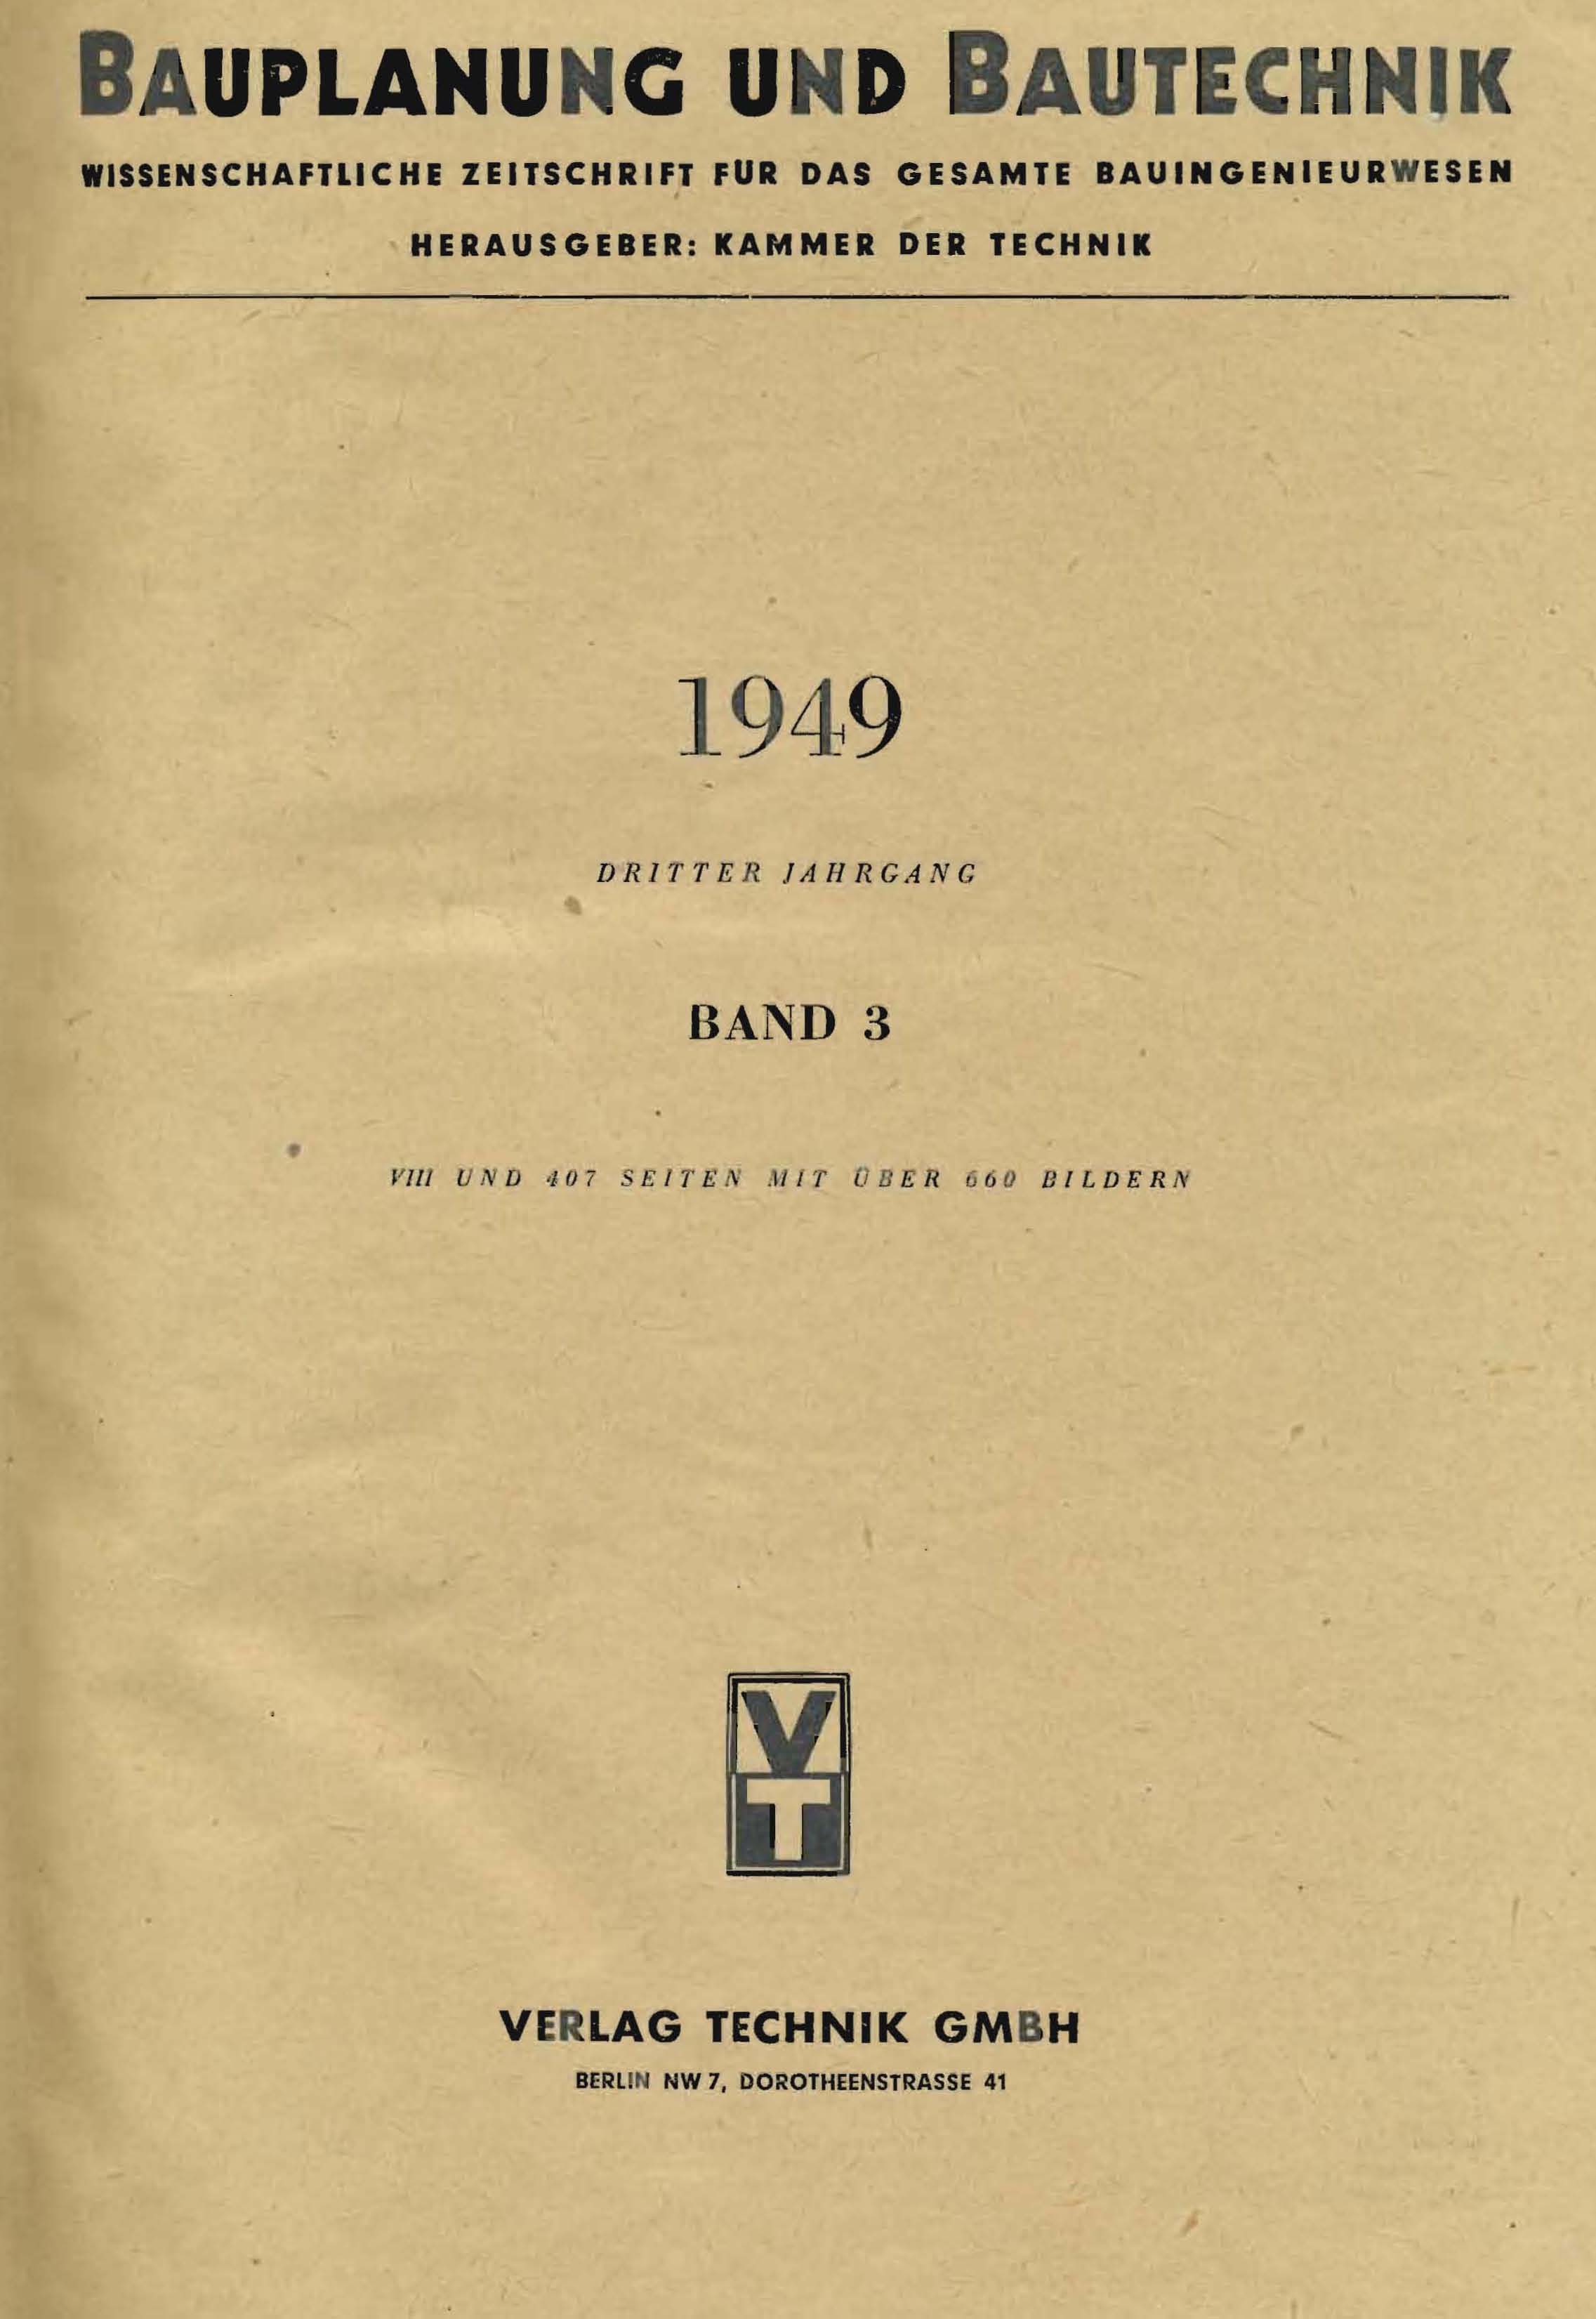 Bauplanung und Bautechnik, 1949, Dritter Jahrgang, Band 3